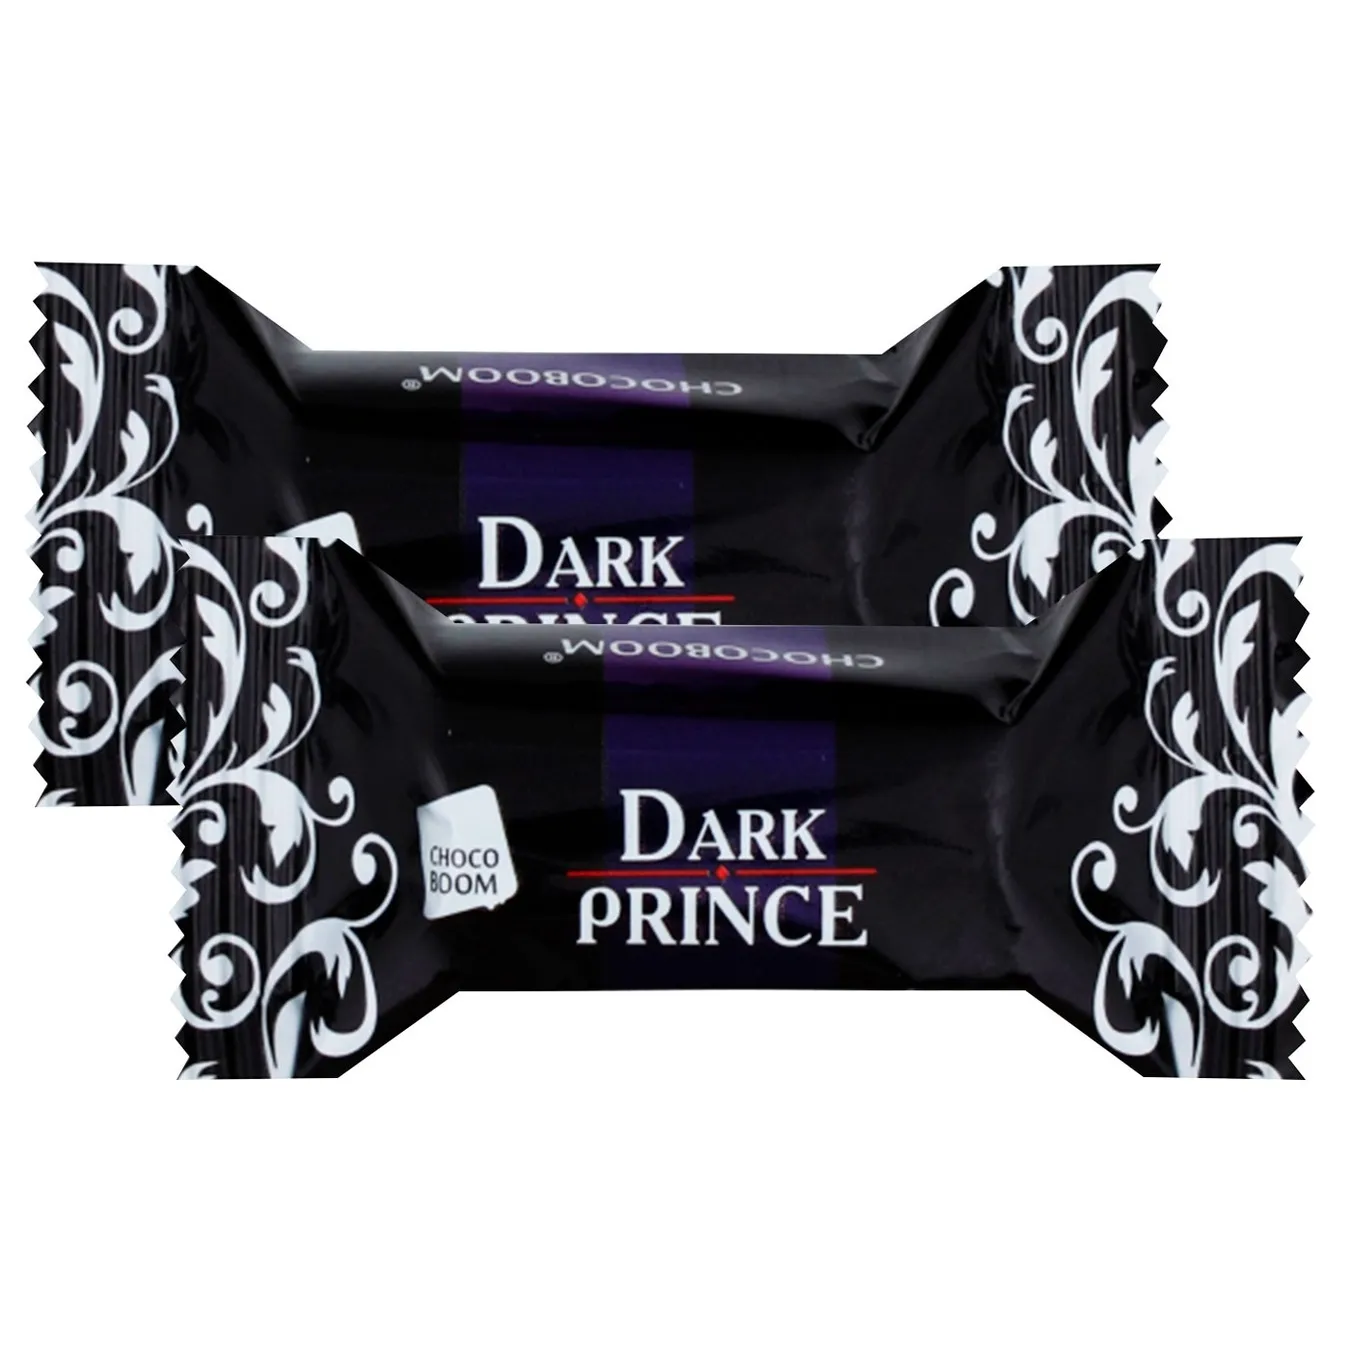 ChocoBoom Dark Prince candies